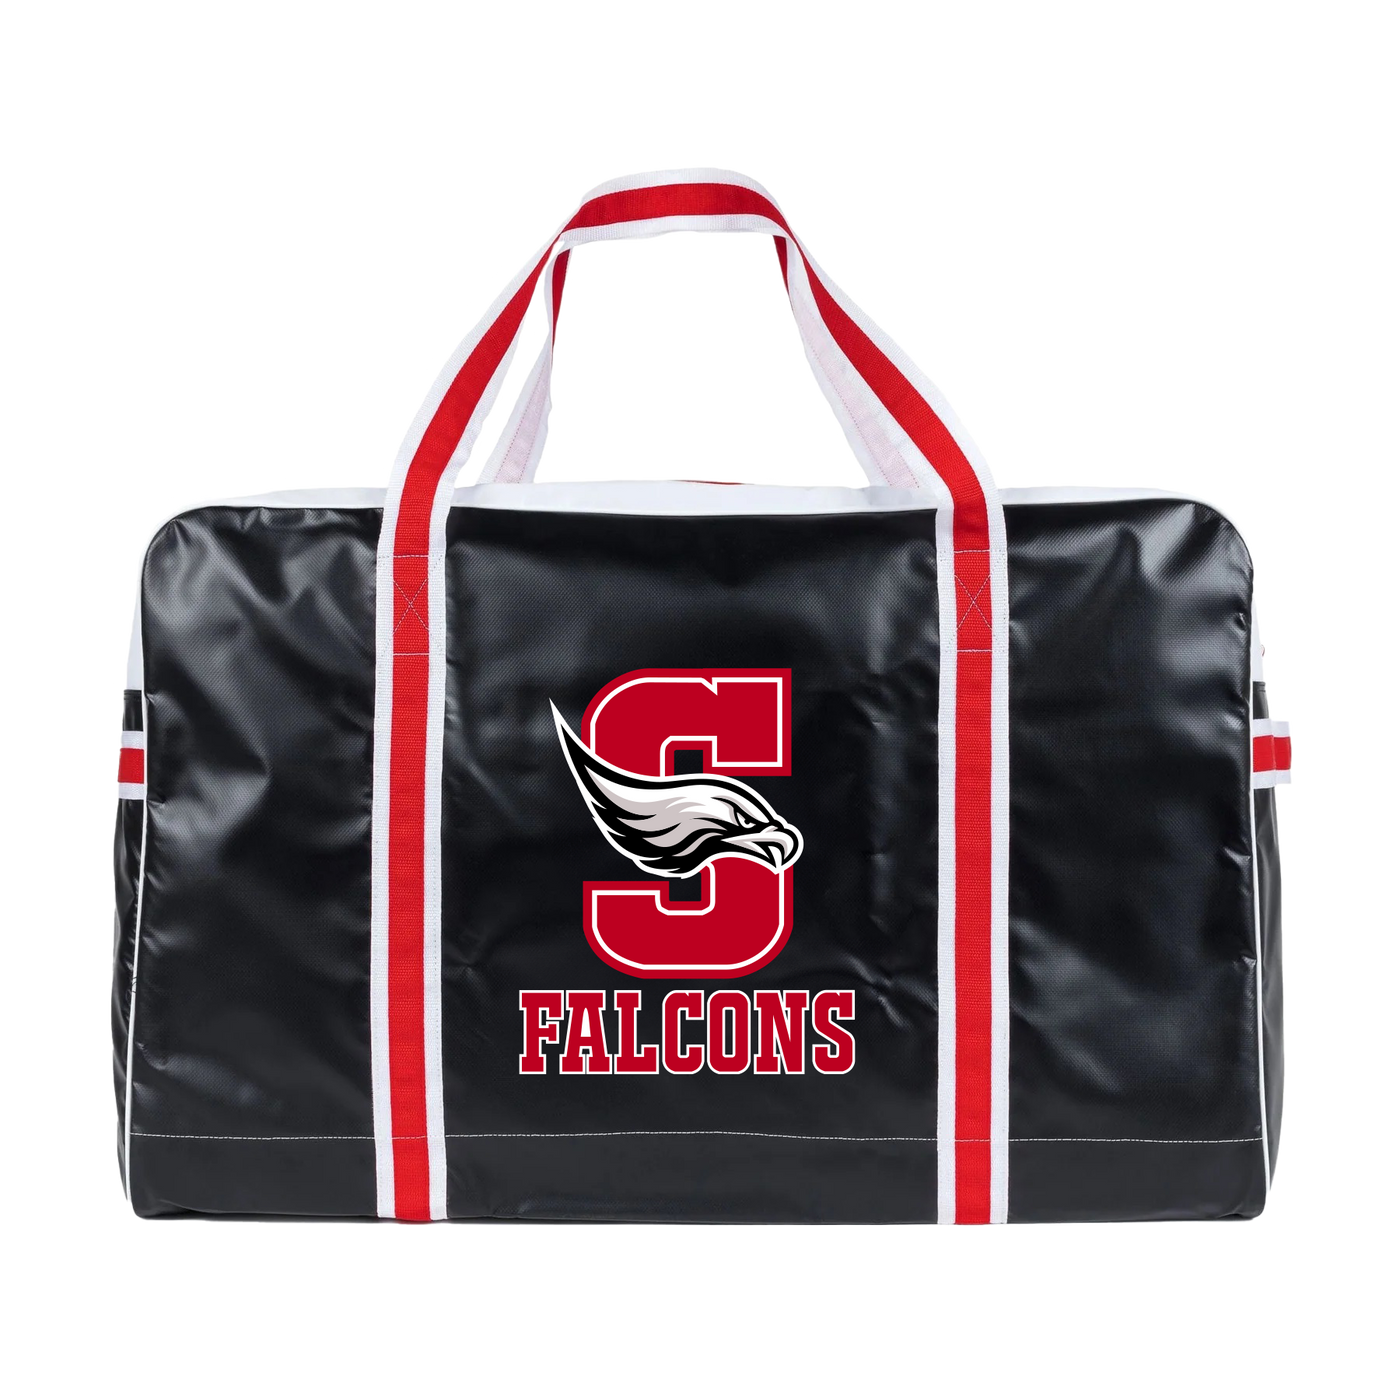 Surrey Falcons -- Warrior Intermediate Pro Carry Bag